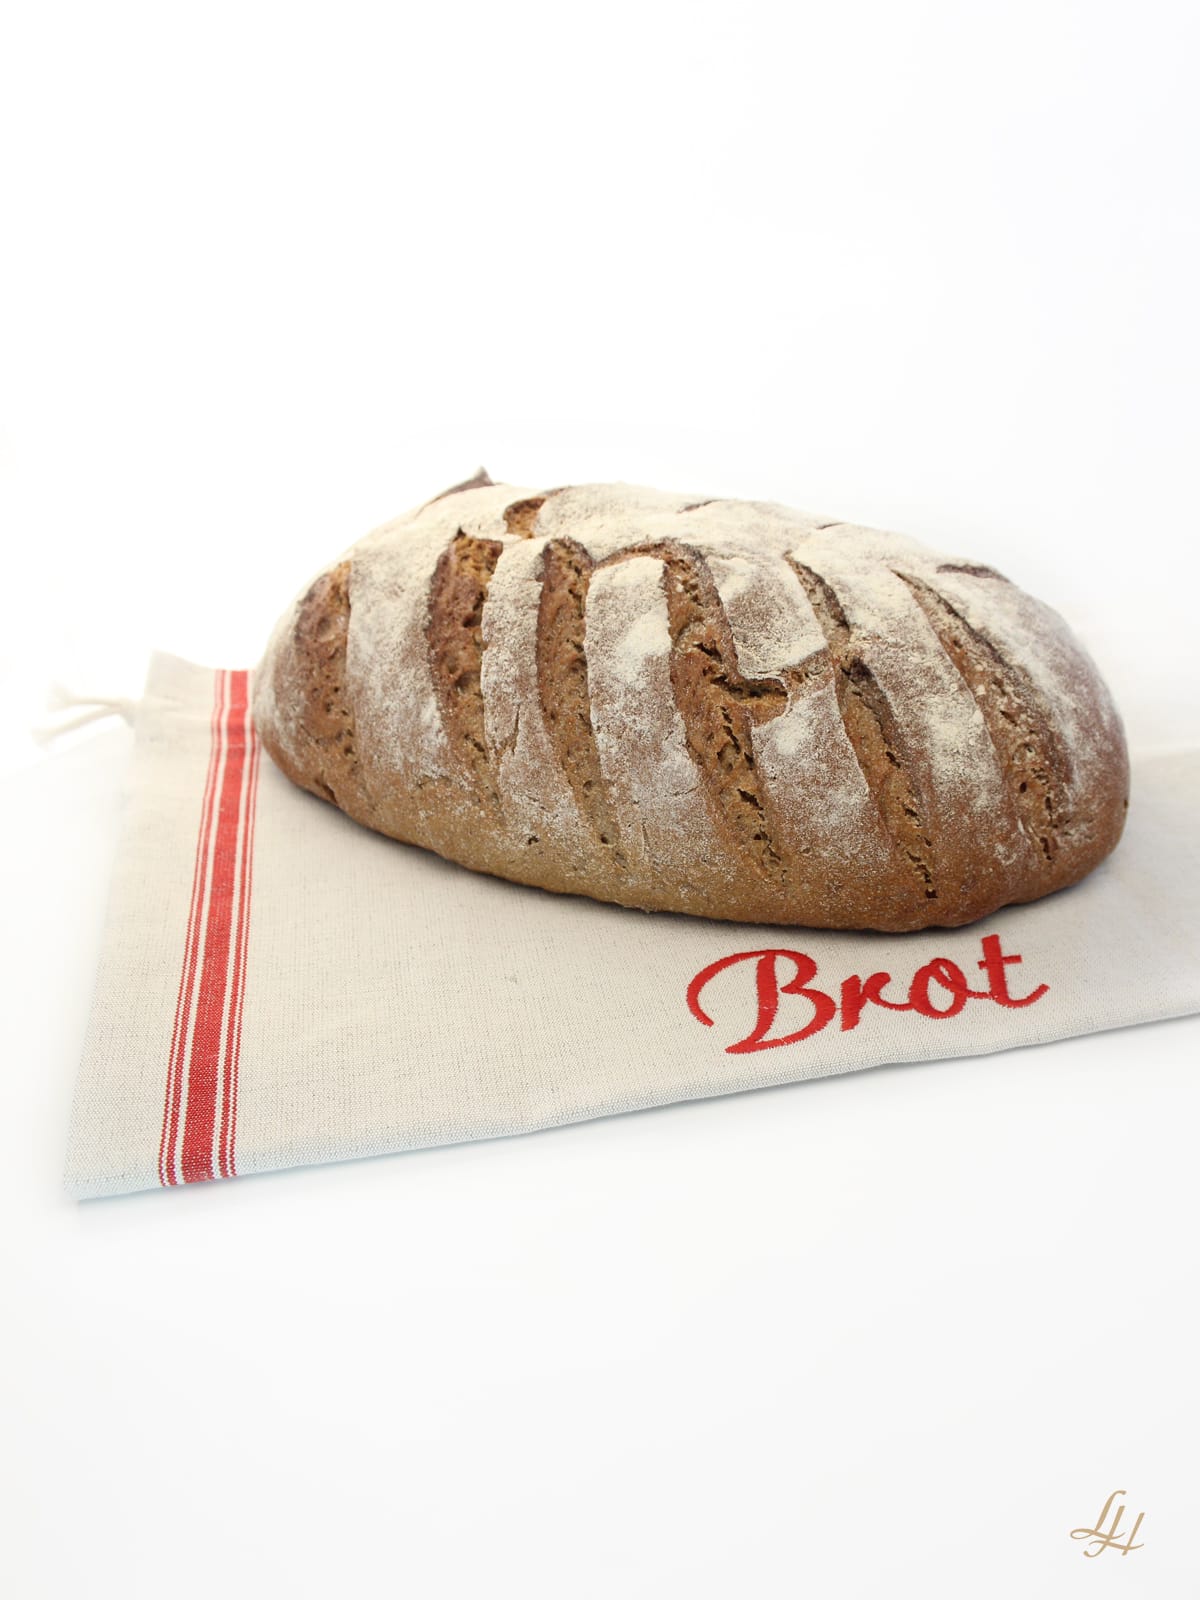 Brotbeutel mit Stickerei Rot mit Brot